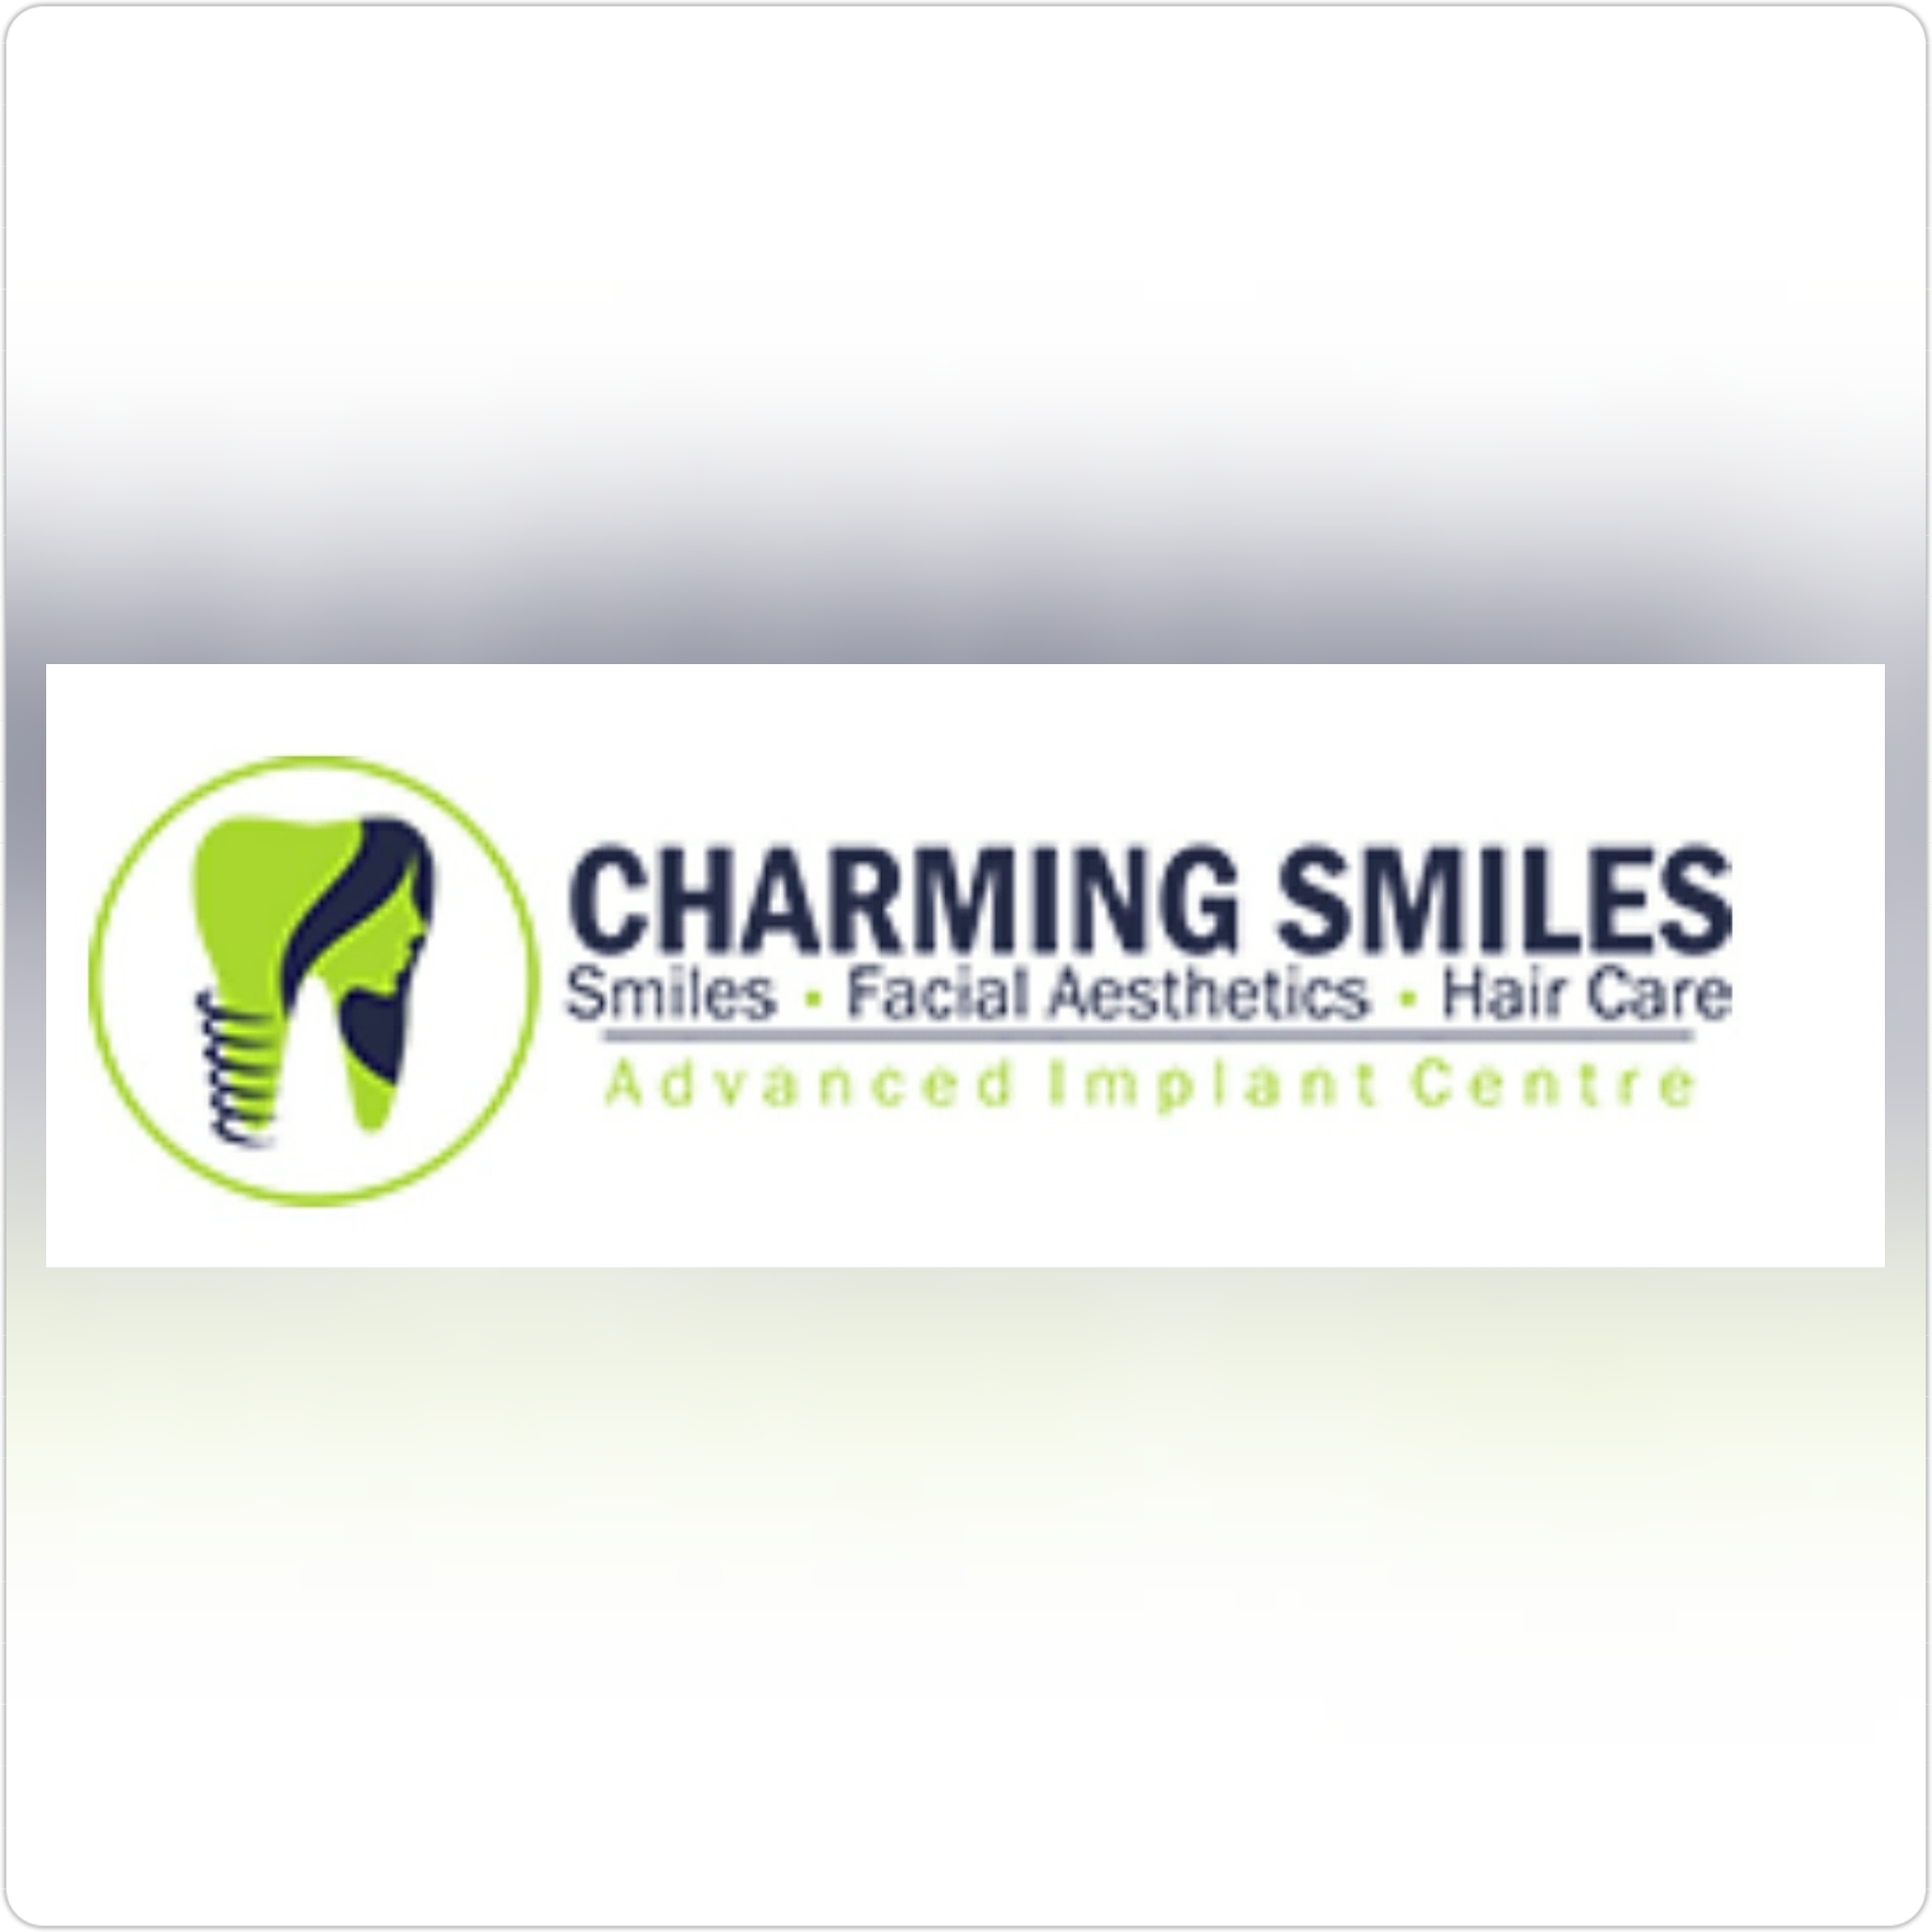 Charming Smiles